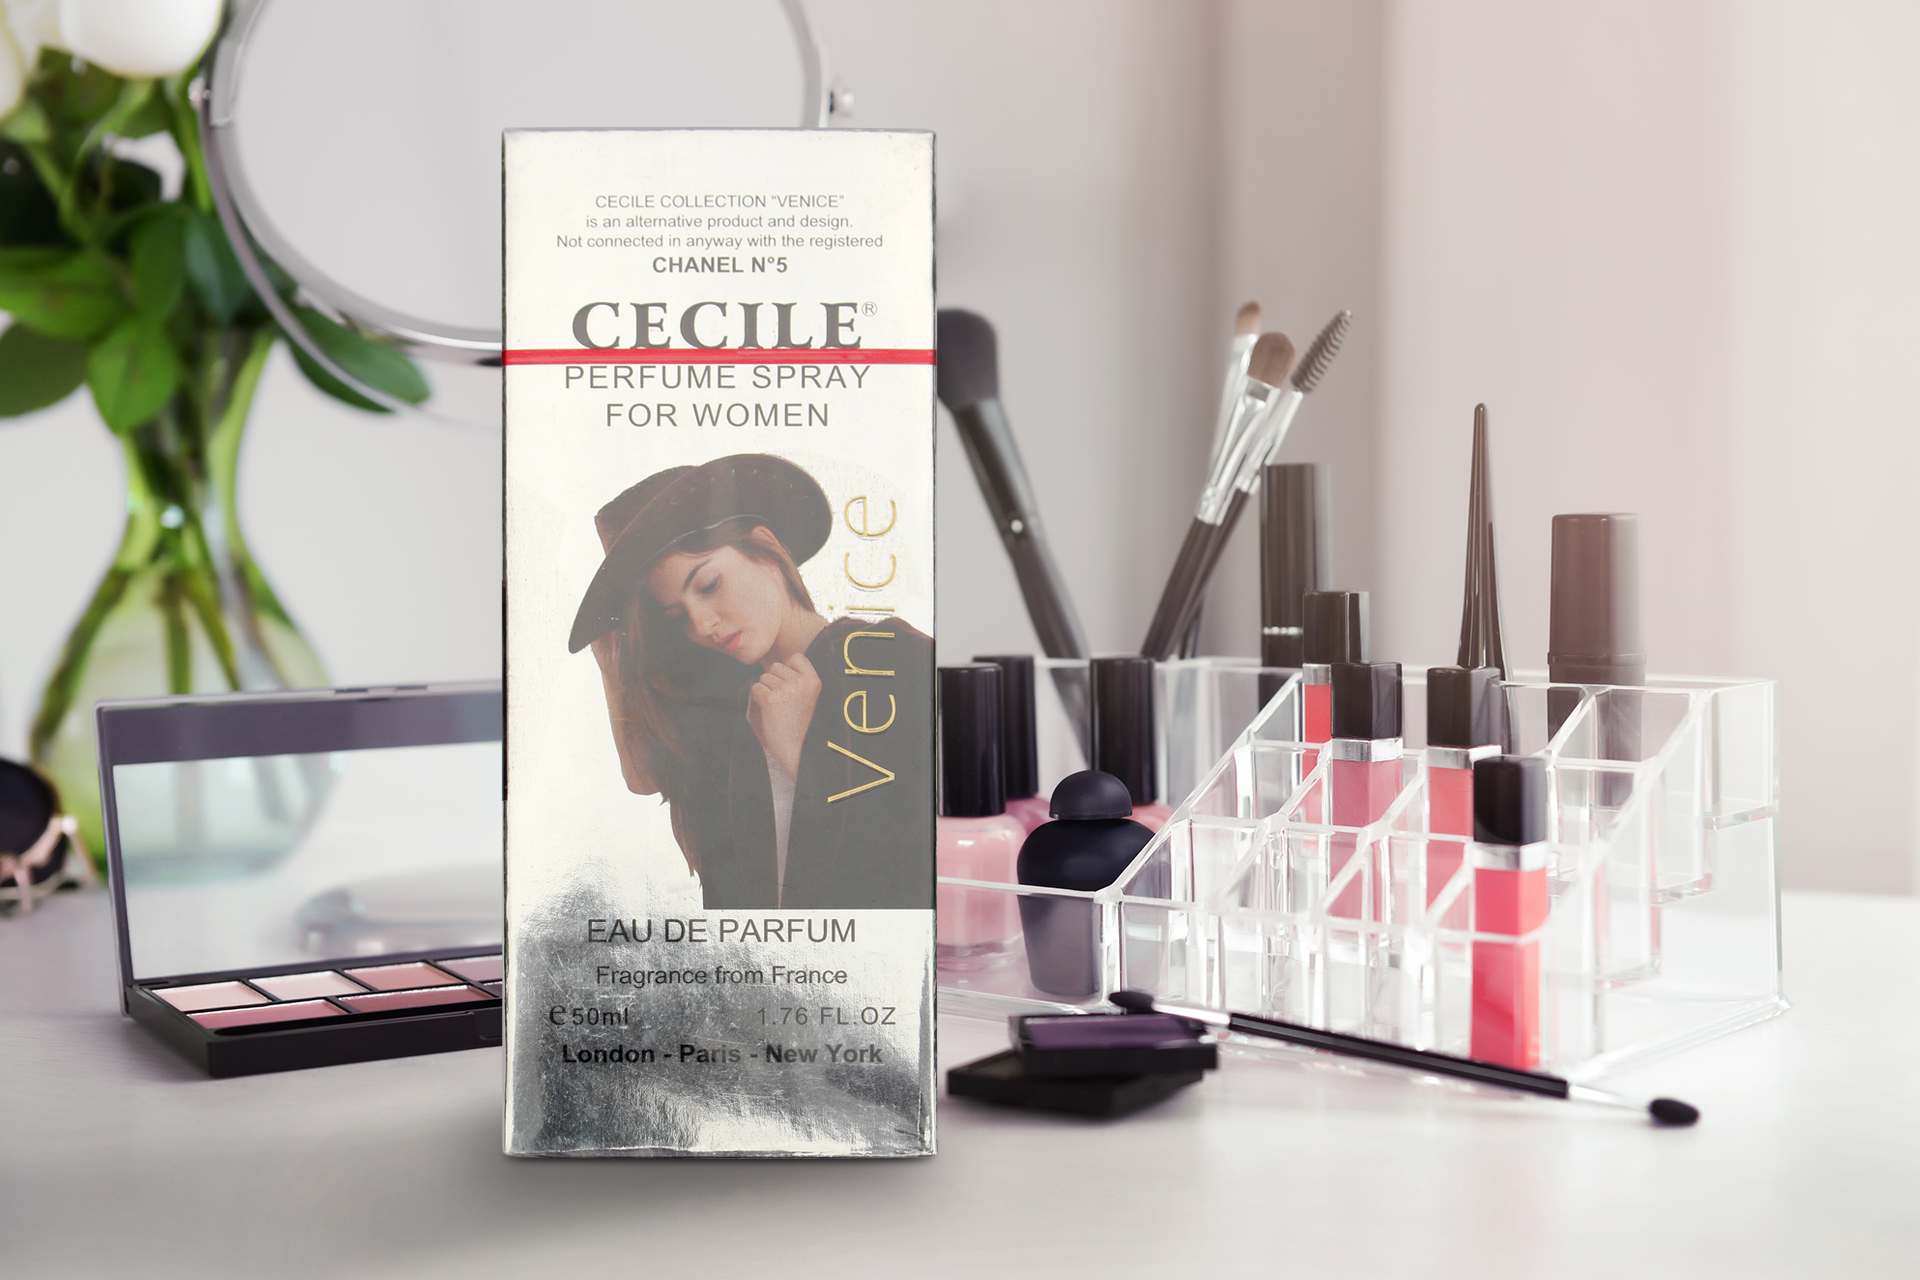 https://orbitsarl.com/wp-content/uploads/2017/08/Product-Perfume_Cecile_Venice-50ml_1920x1280-FIN.jpg